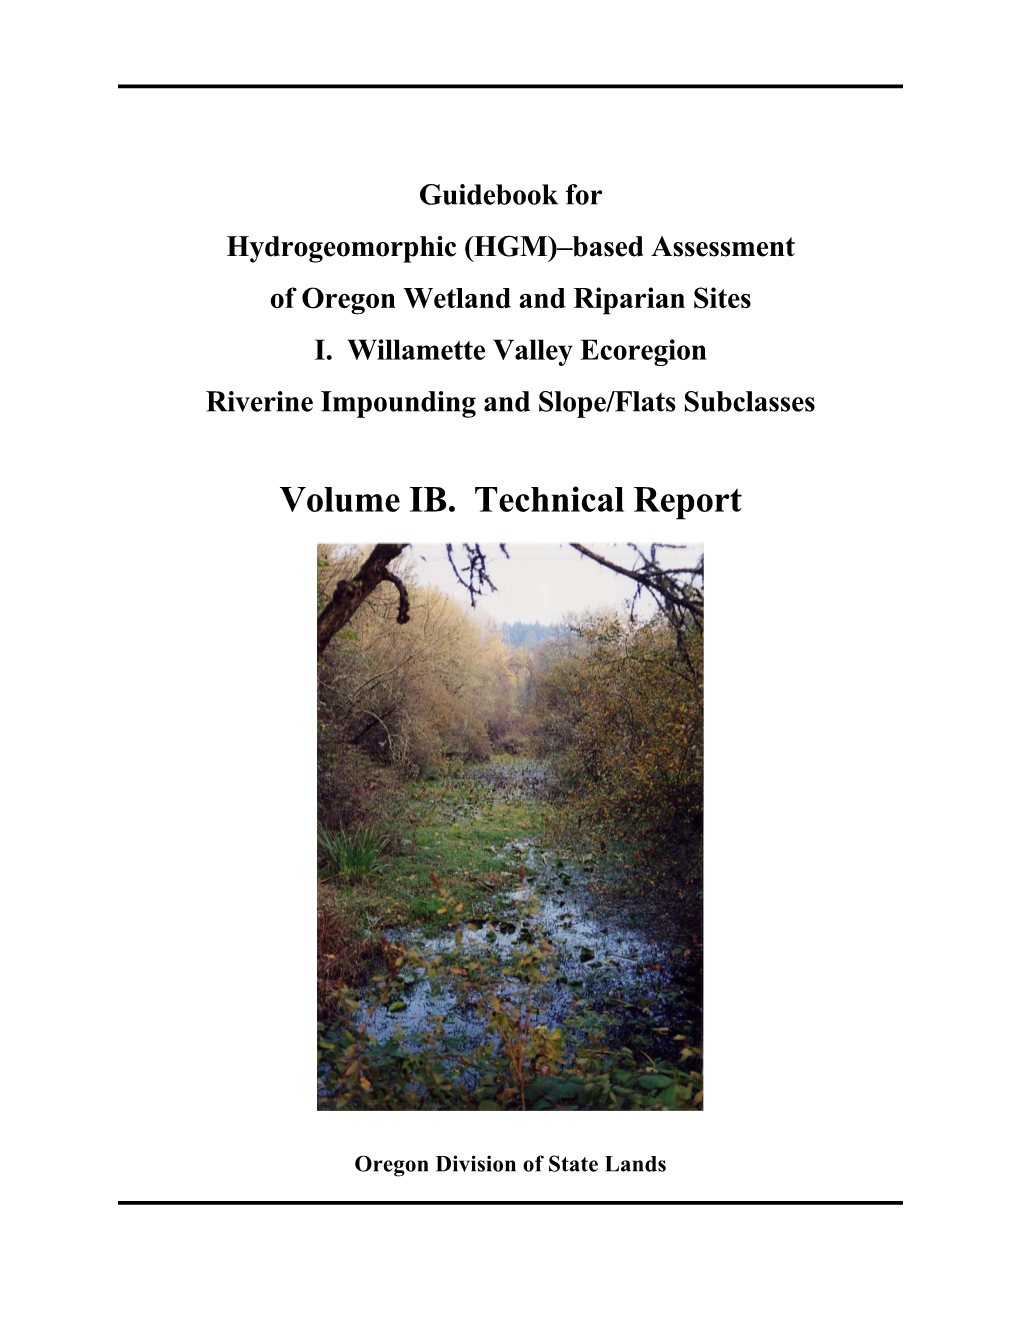 Willamette Valley Ecoregion Hydrogeomorphic Assessment